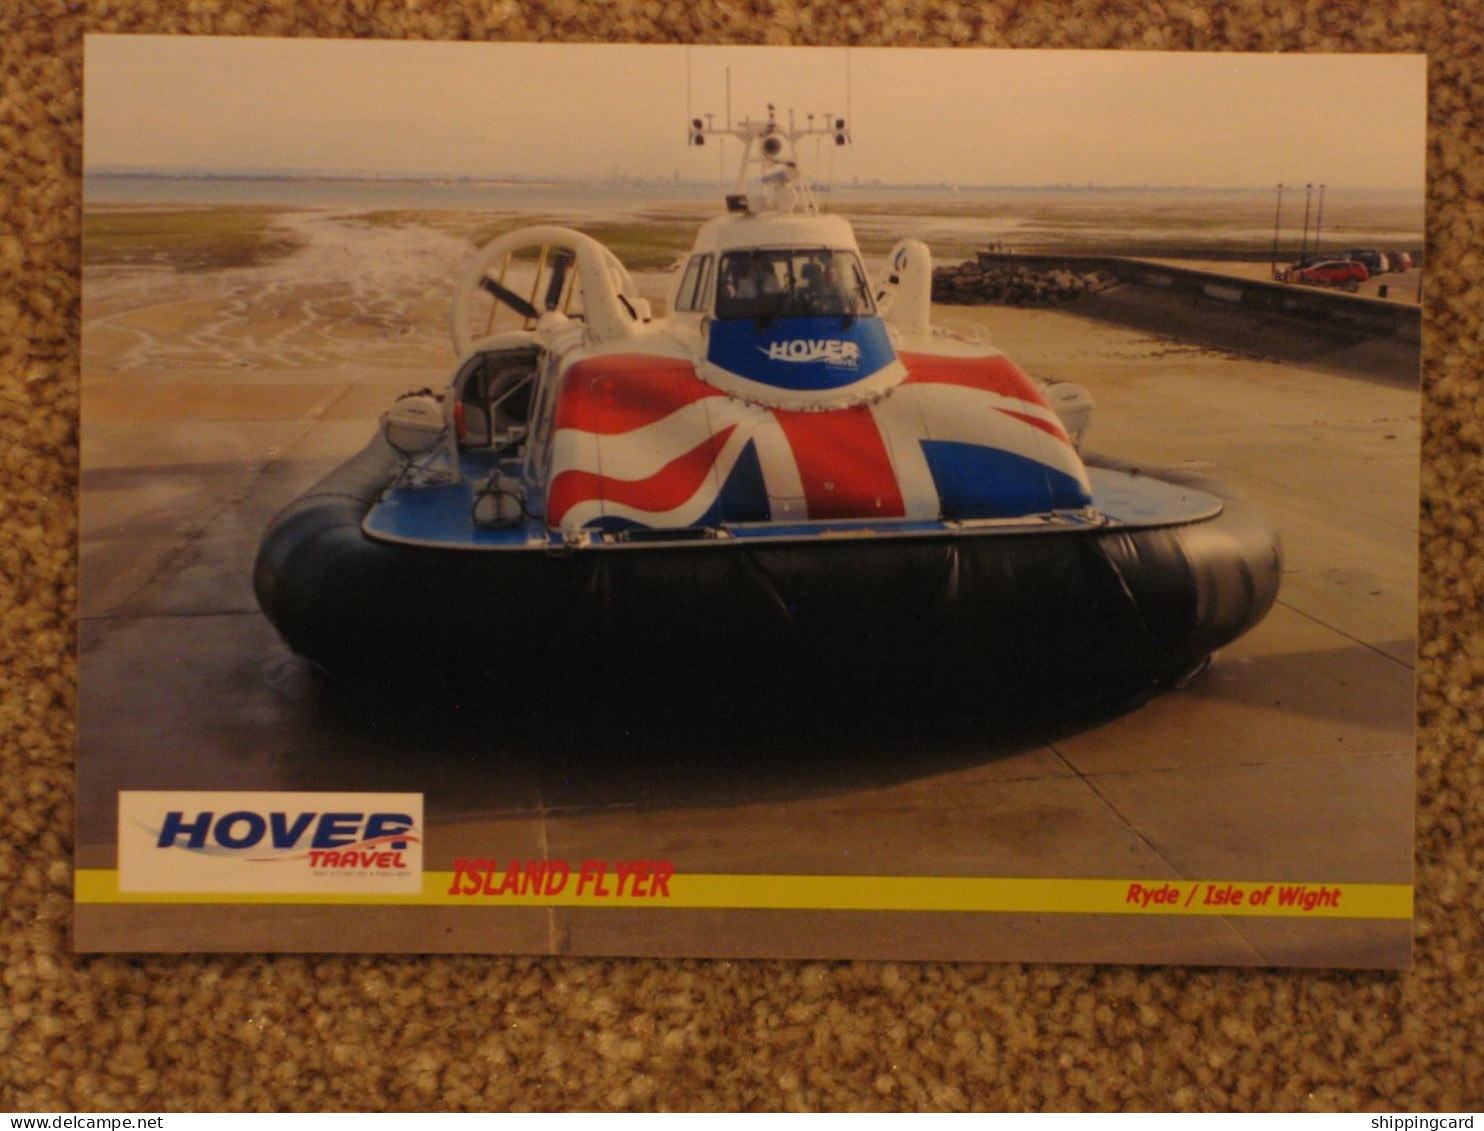 HOVERTRAVEL ISLAND FLYER - Hovercrafts